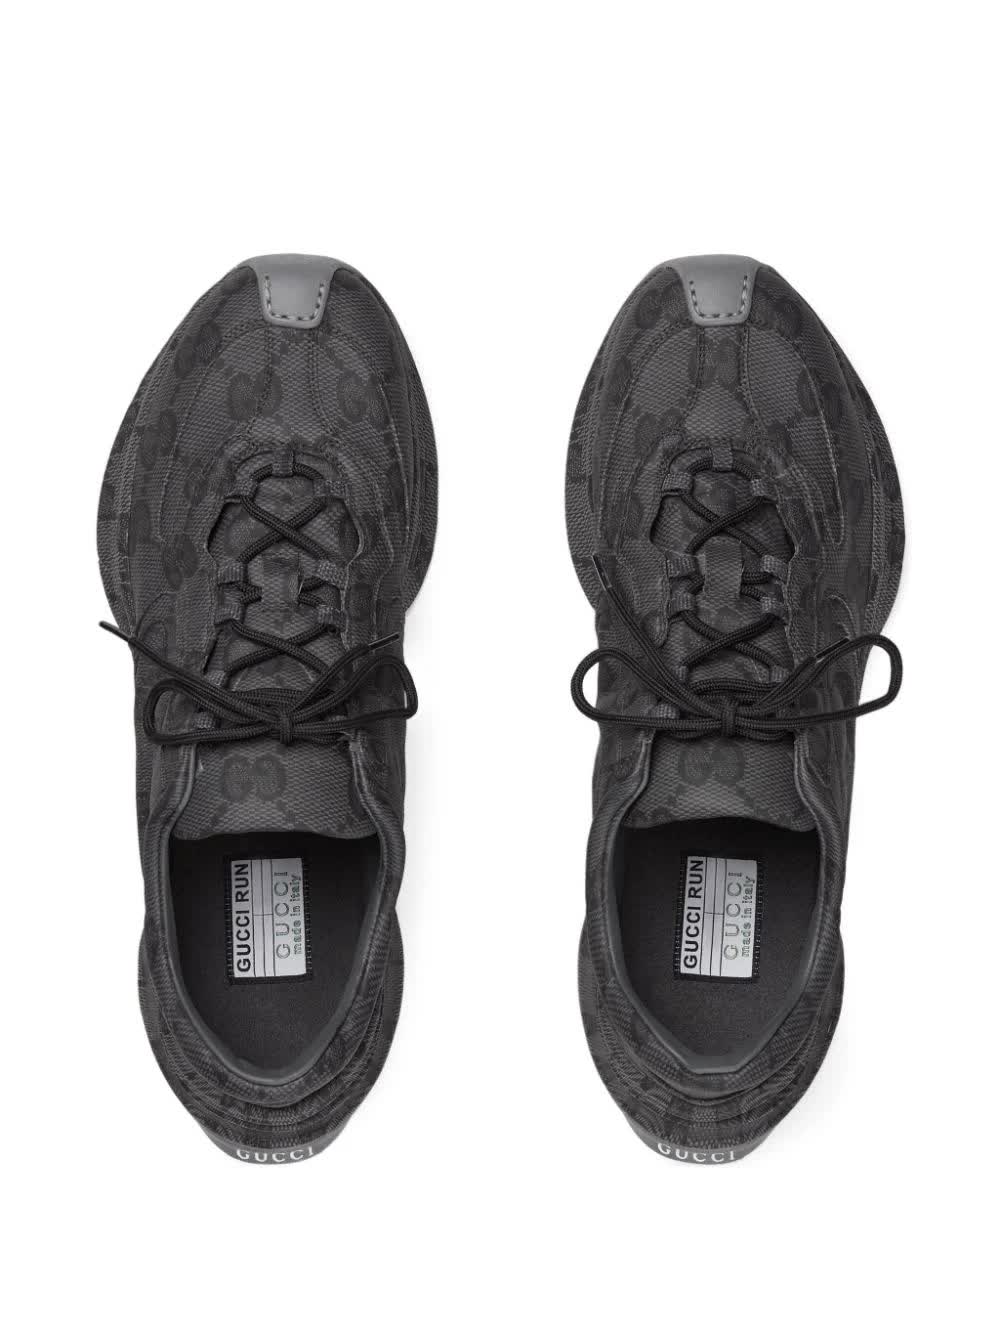 Gucci, Run GG-Motif Leather Sneakers